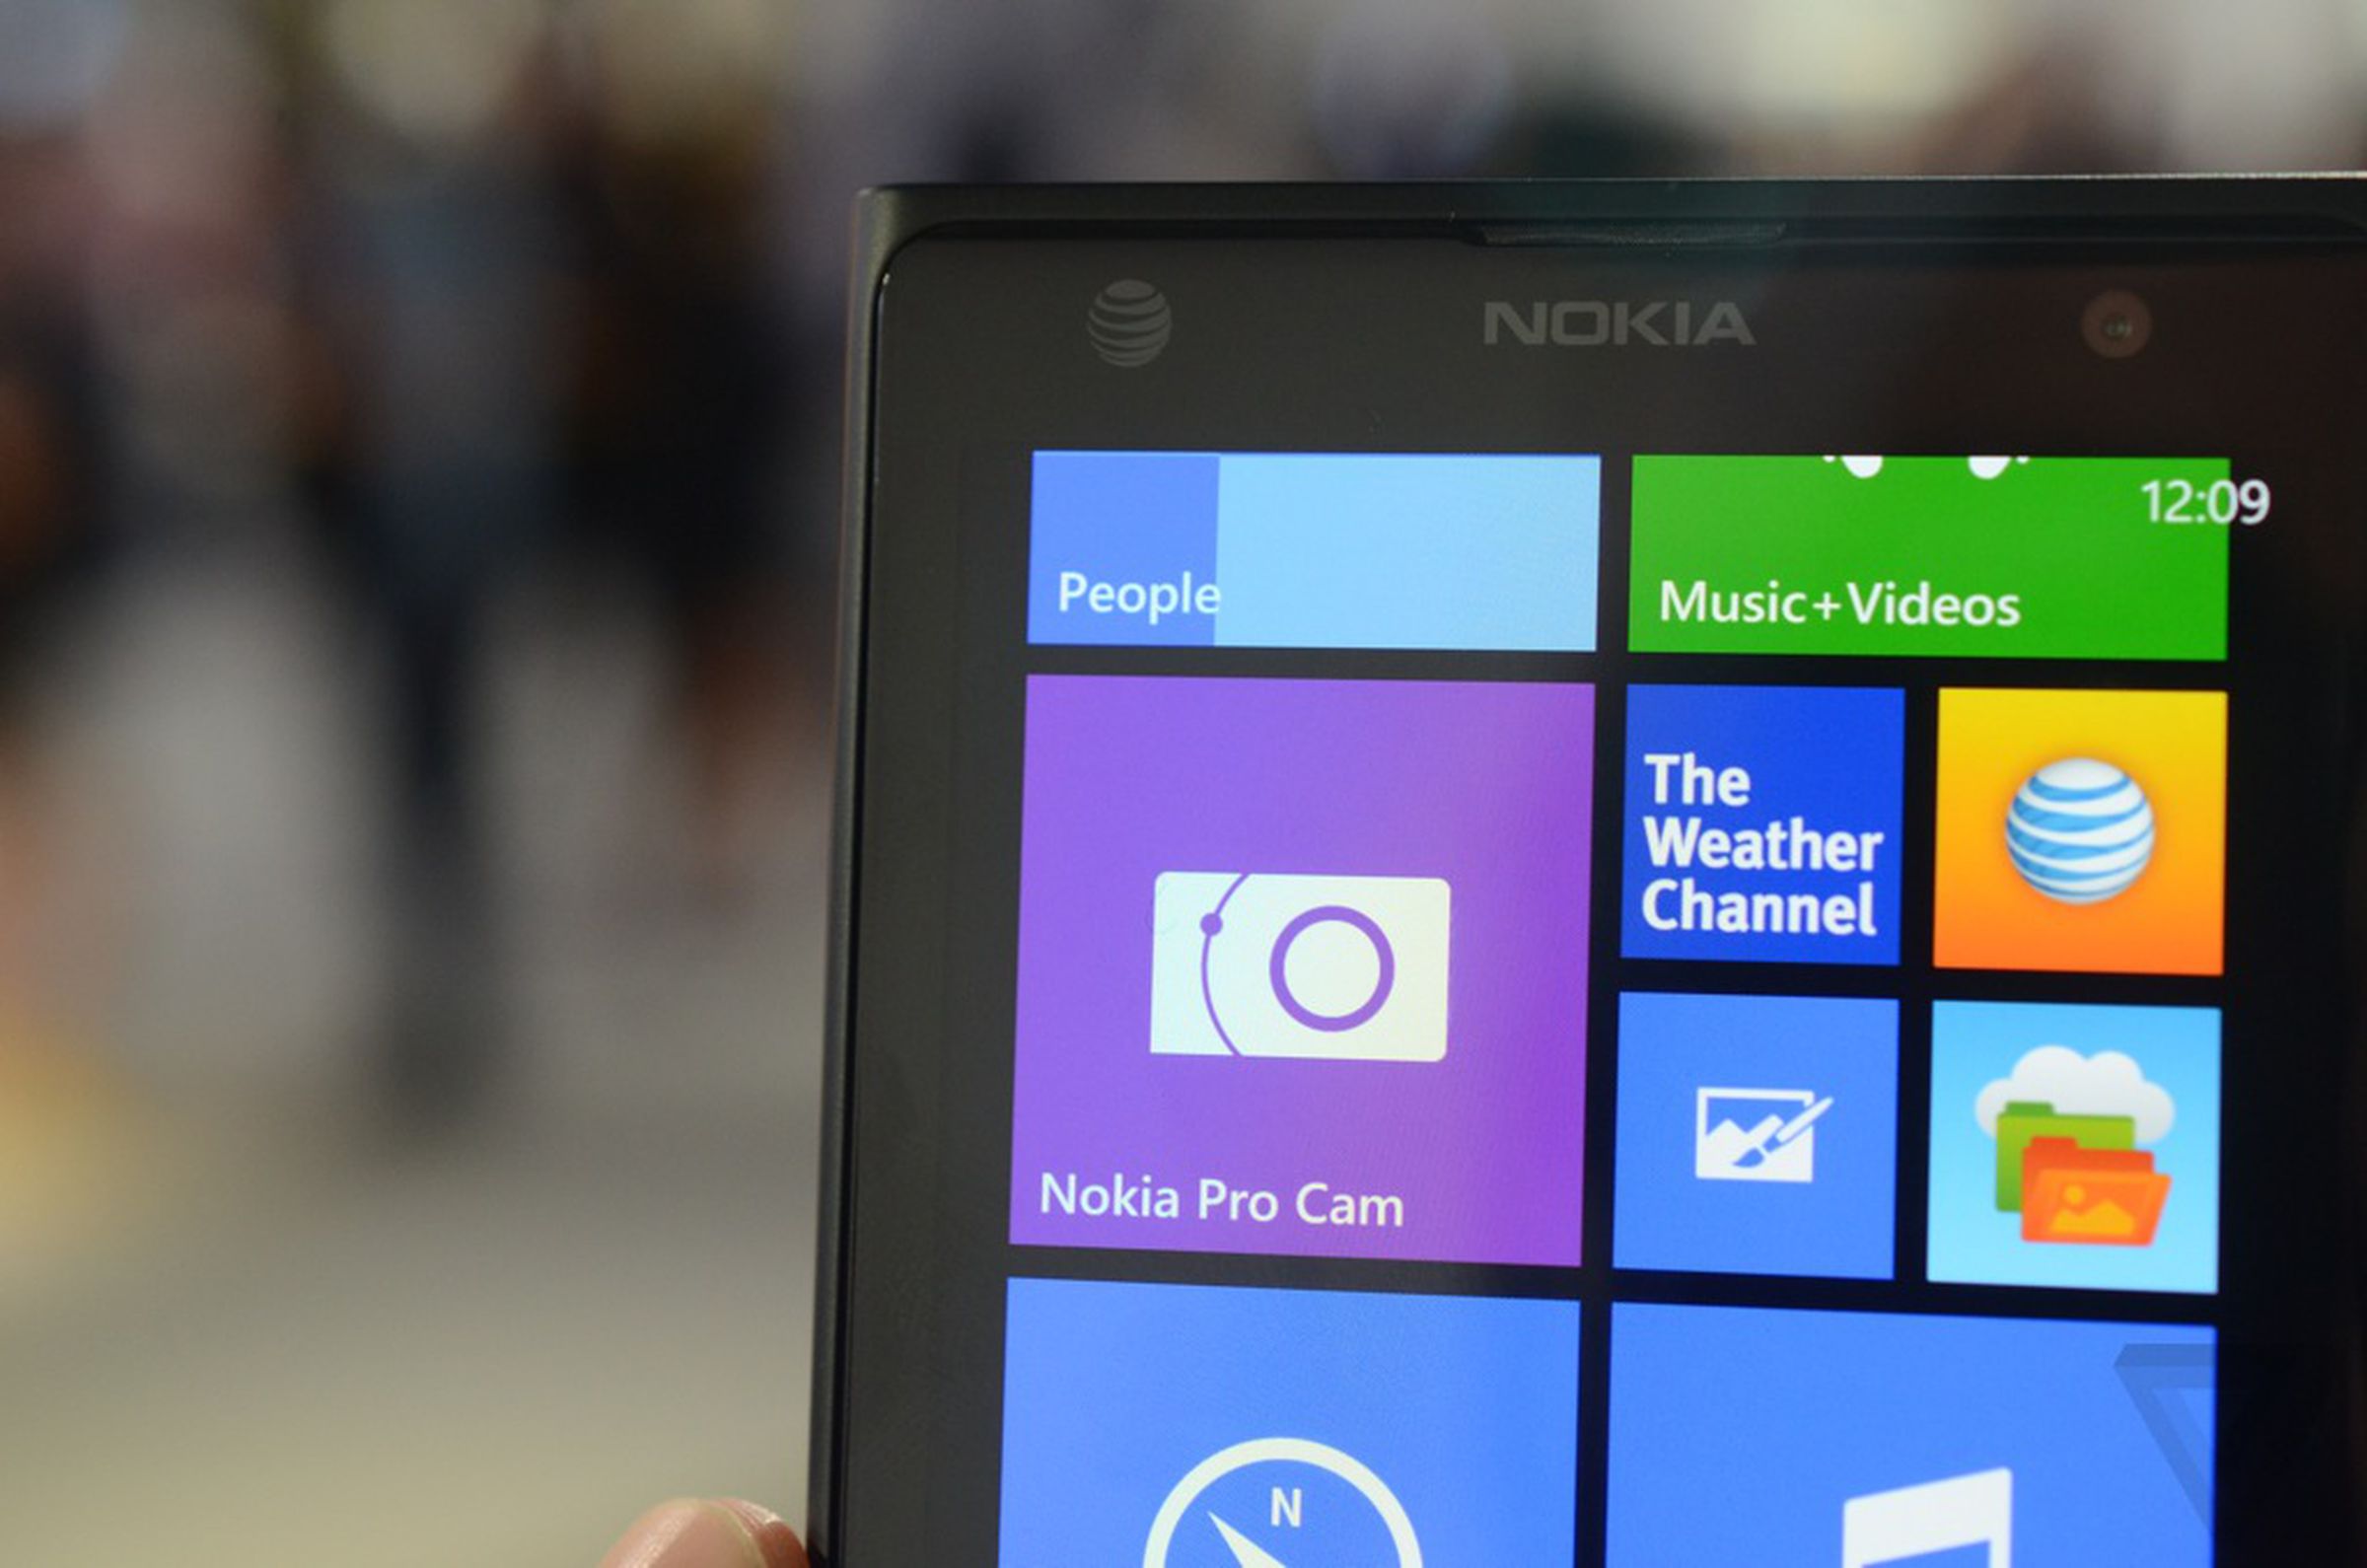 Nokia Lumia 1020 hands-on photos